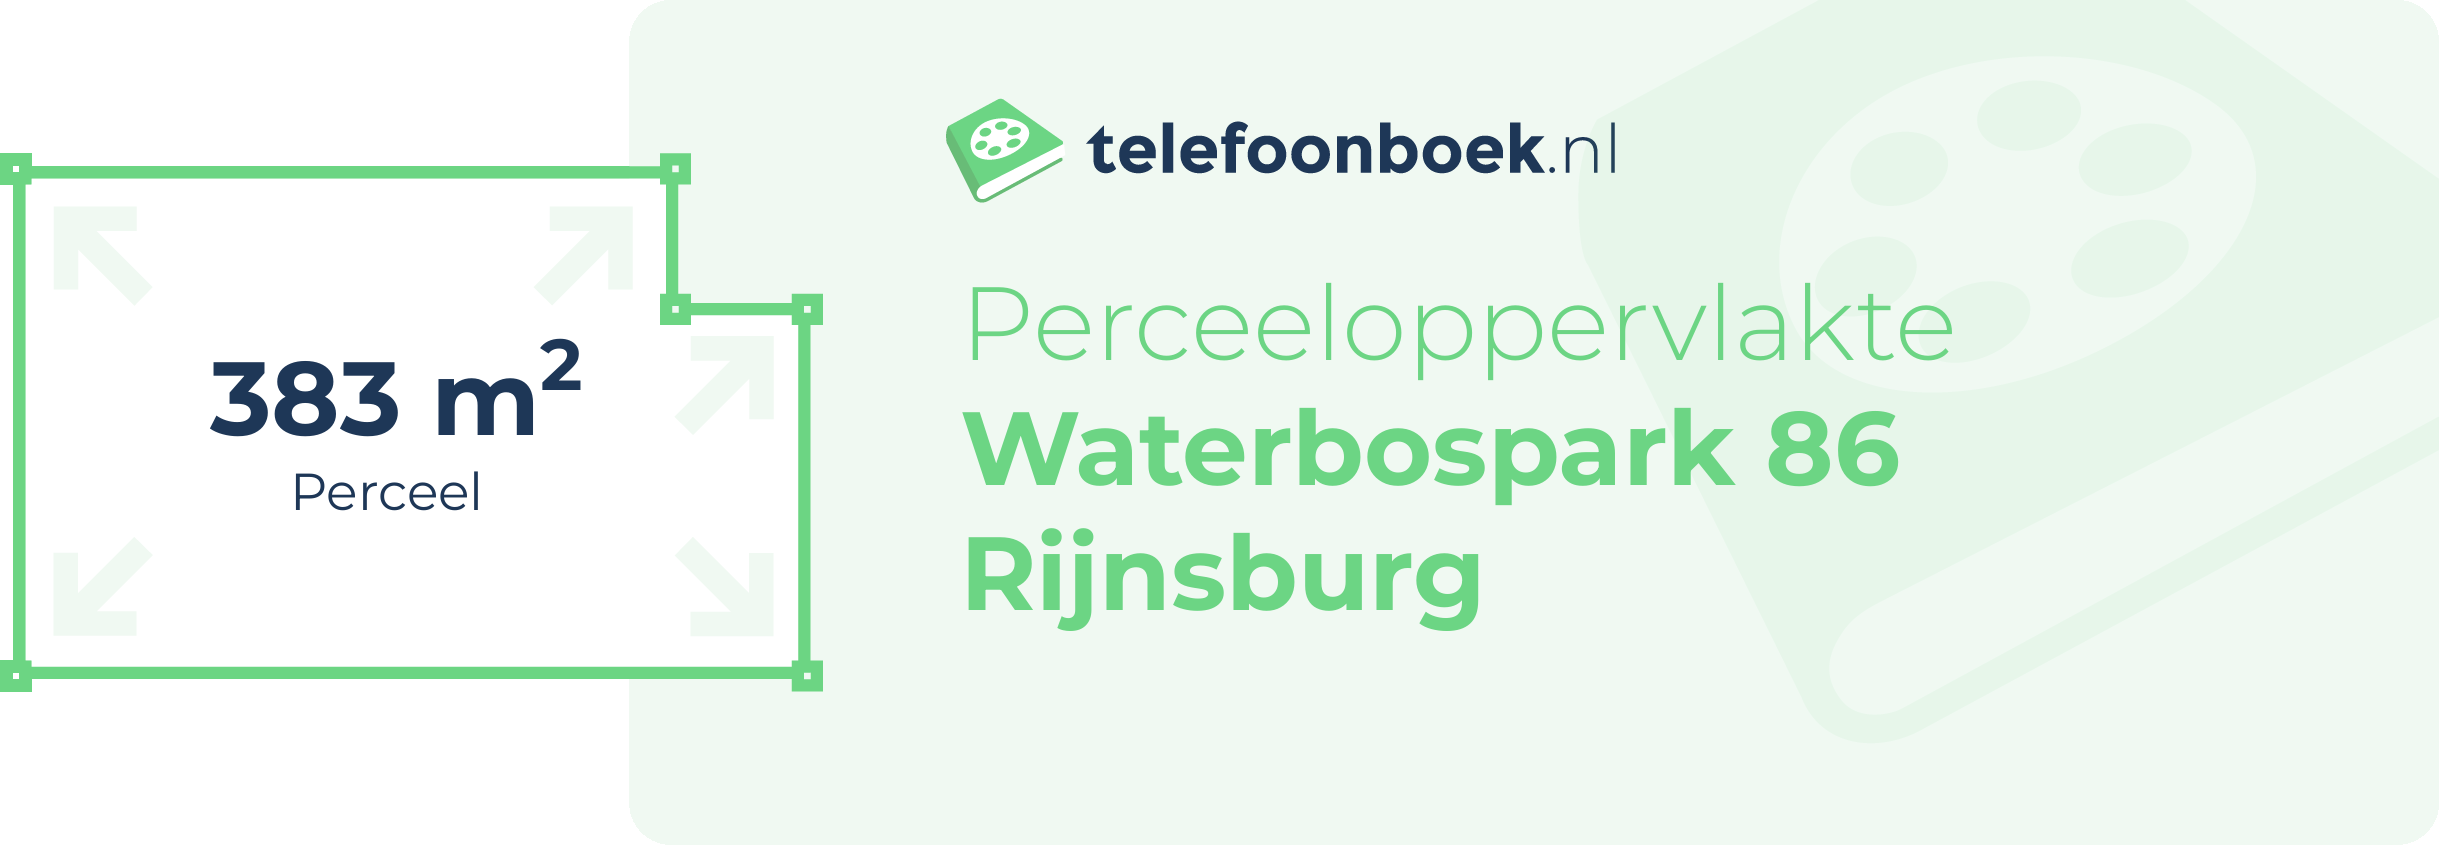 Perceeloppervlakte Waterbospark 86 Rijnsburg